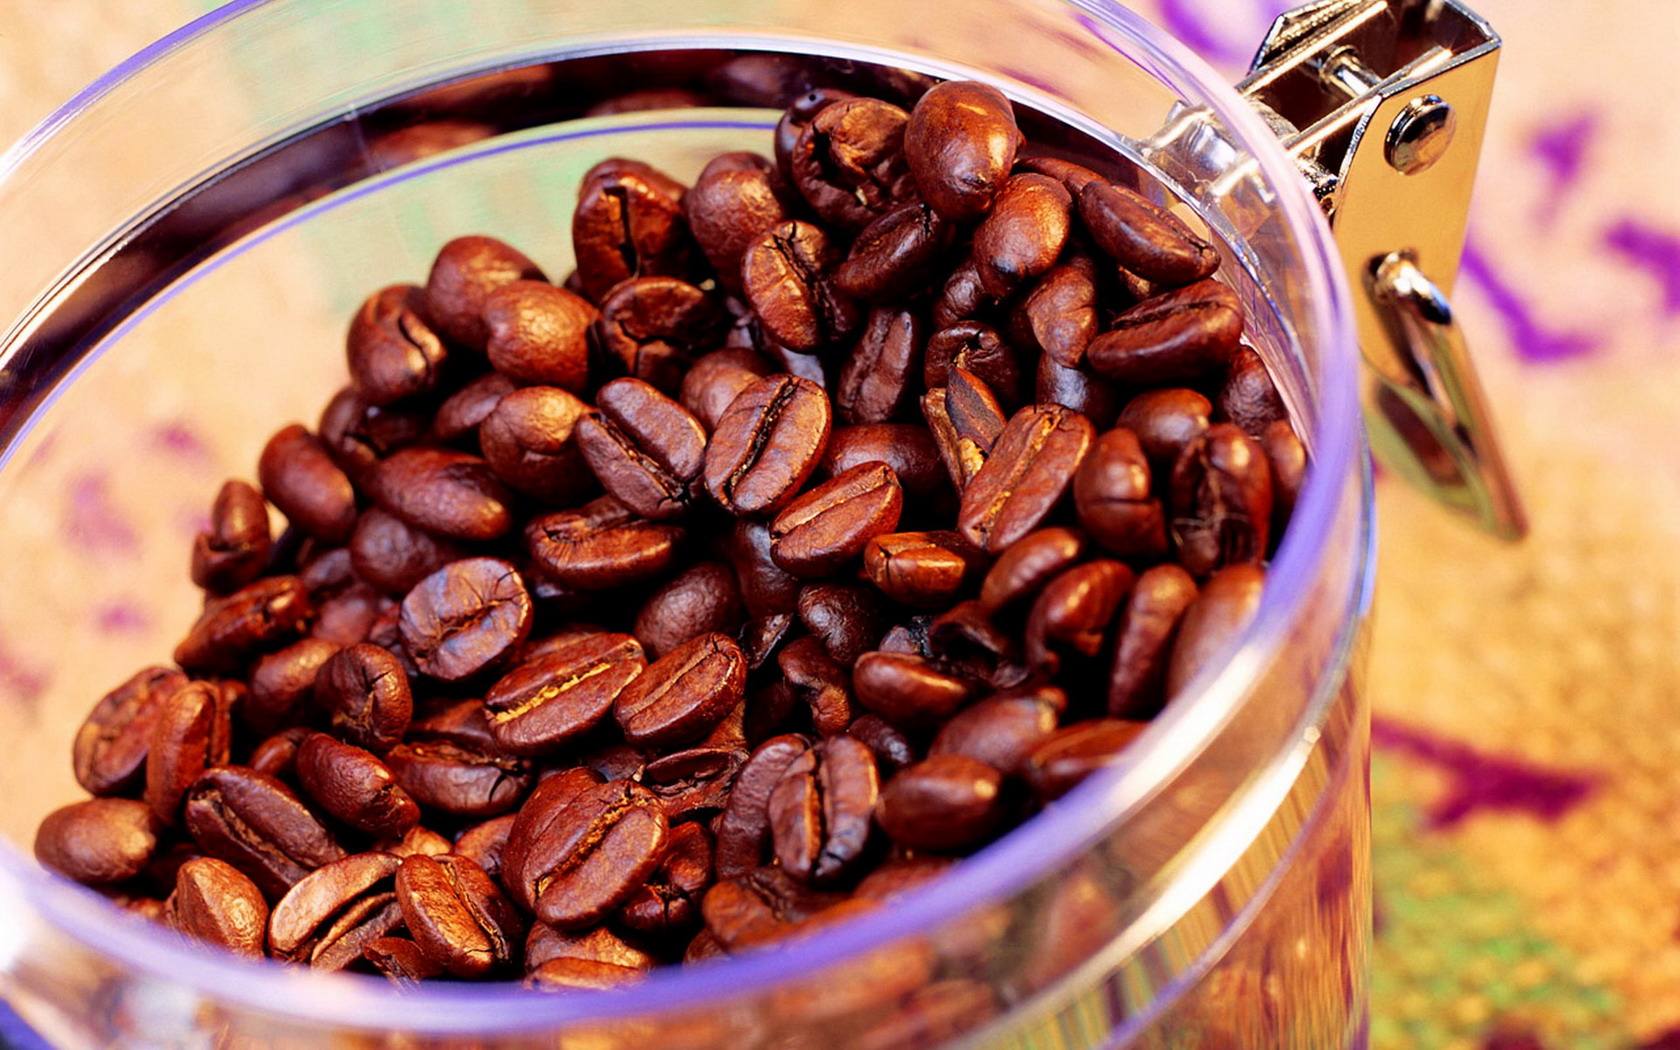 The flavor of Rwandan coffee beans, introduction to Rwandan coffee